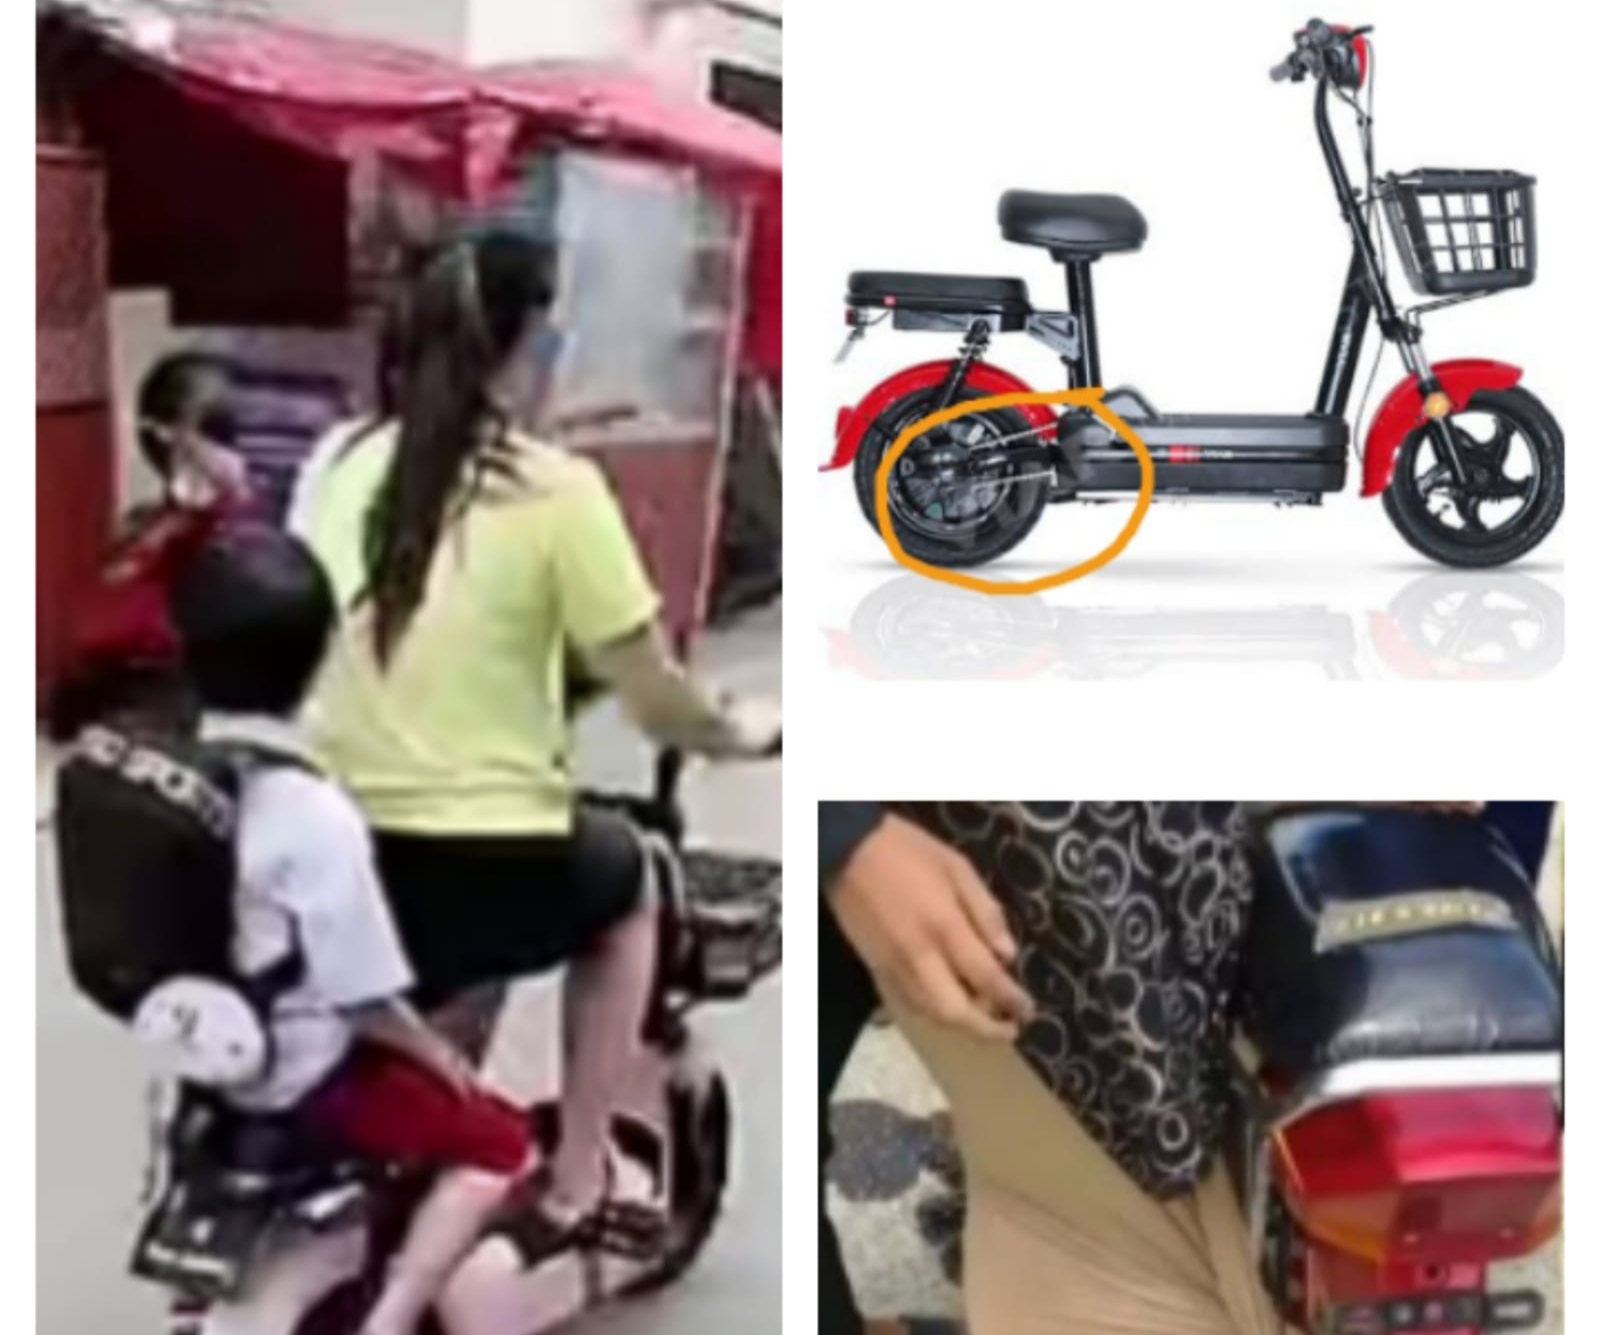 Ingat! Pilih Sepeda Listrik yang Pakai Tutup Rantai Kalau Mau Beli untuk Perempuan, Kenapa